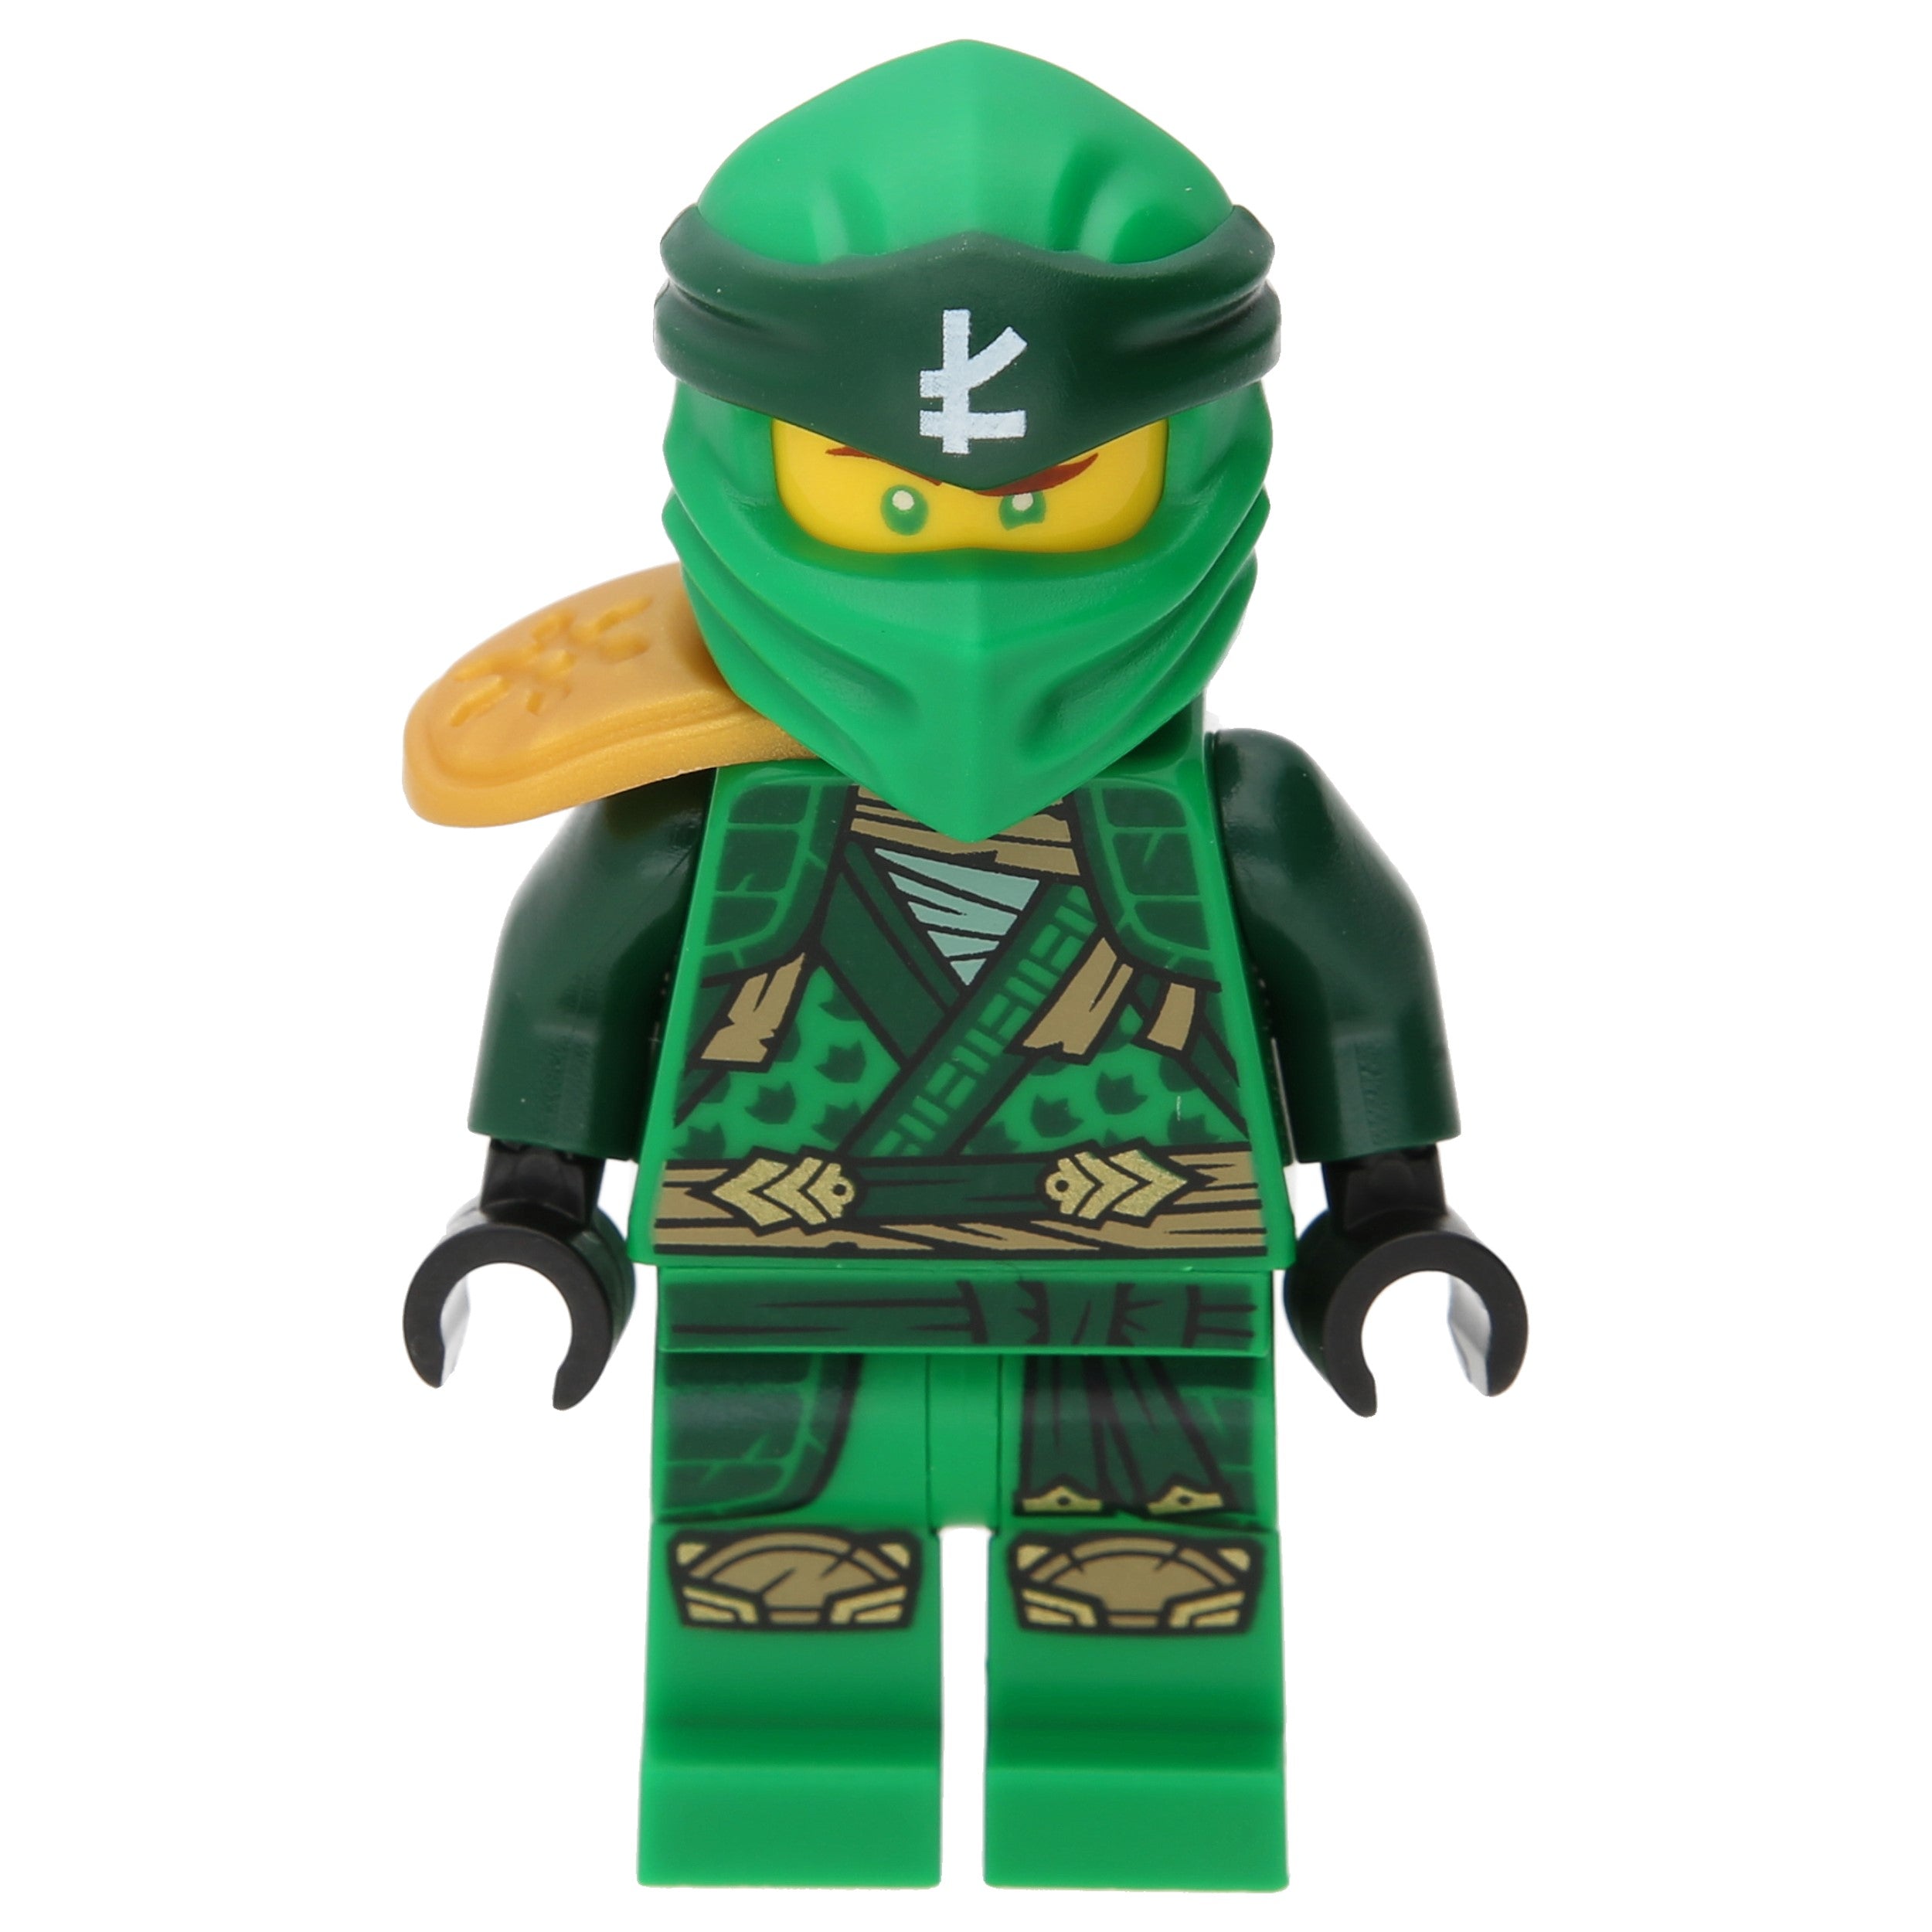 Lego Ninjago Minifigures - Lloyd (the return)